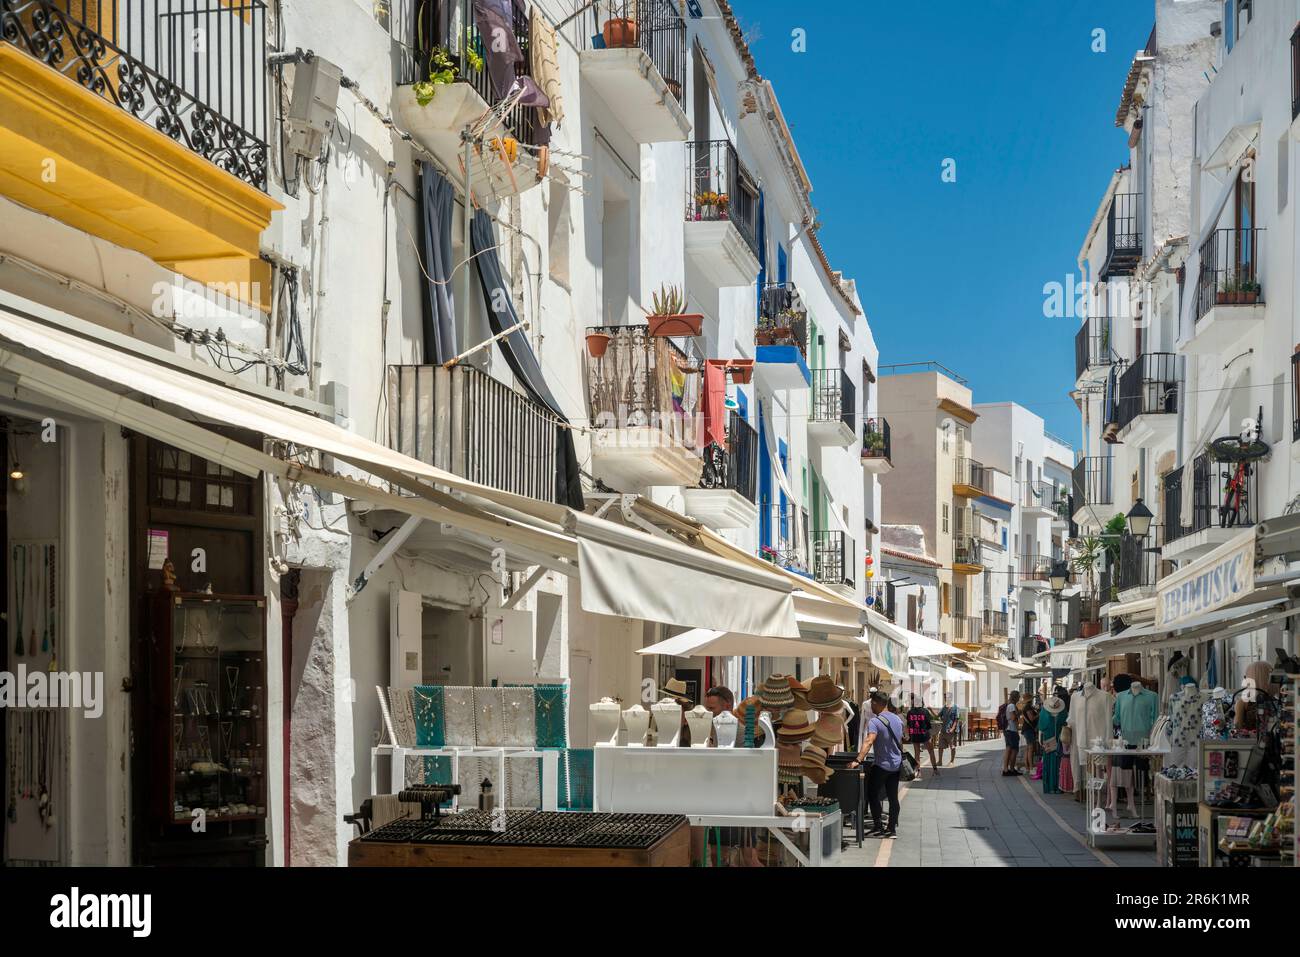 SOUVENIR SHOPS OLD TOWN IBIZA BALEARIC ISLANDS SPAIN Stock Photo